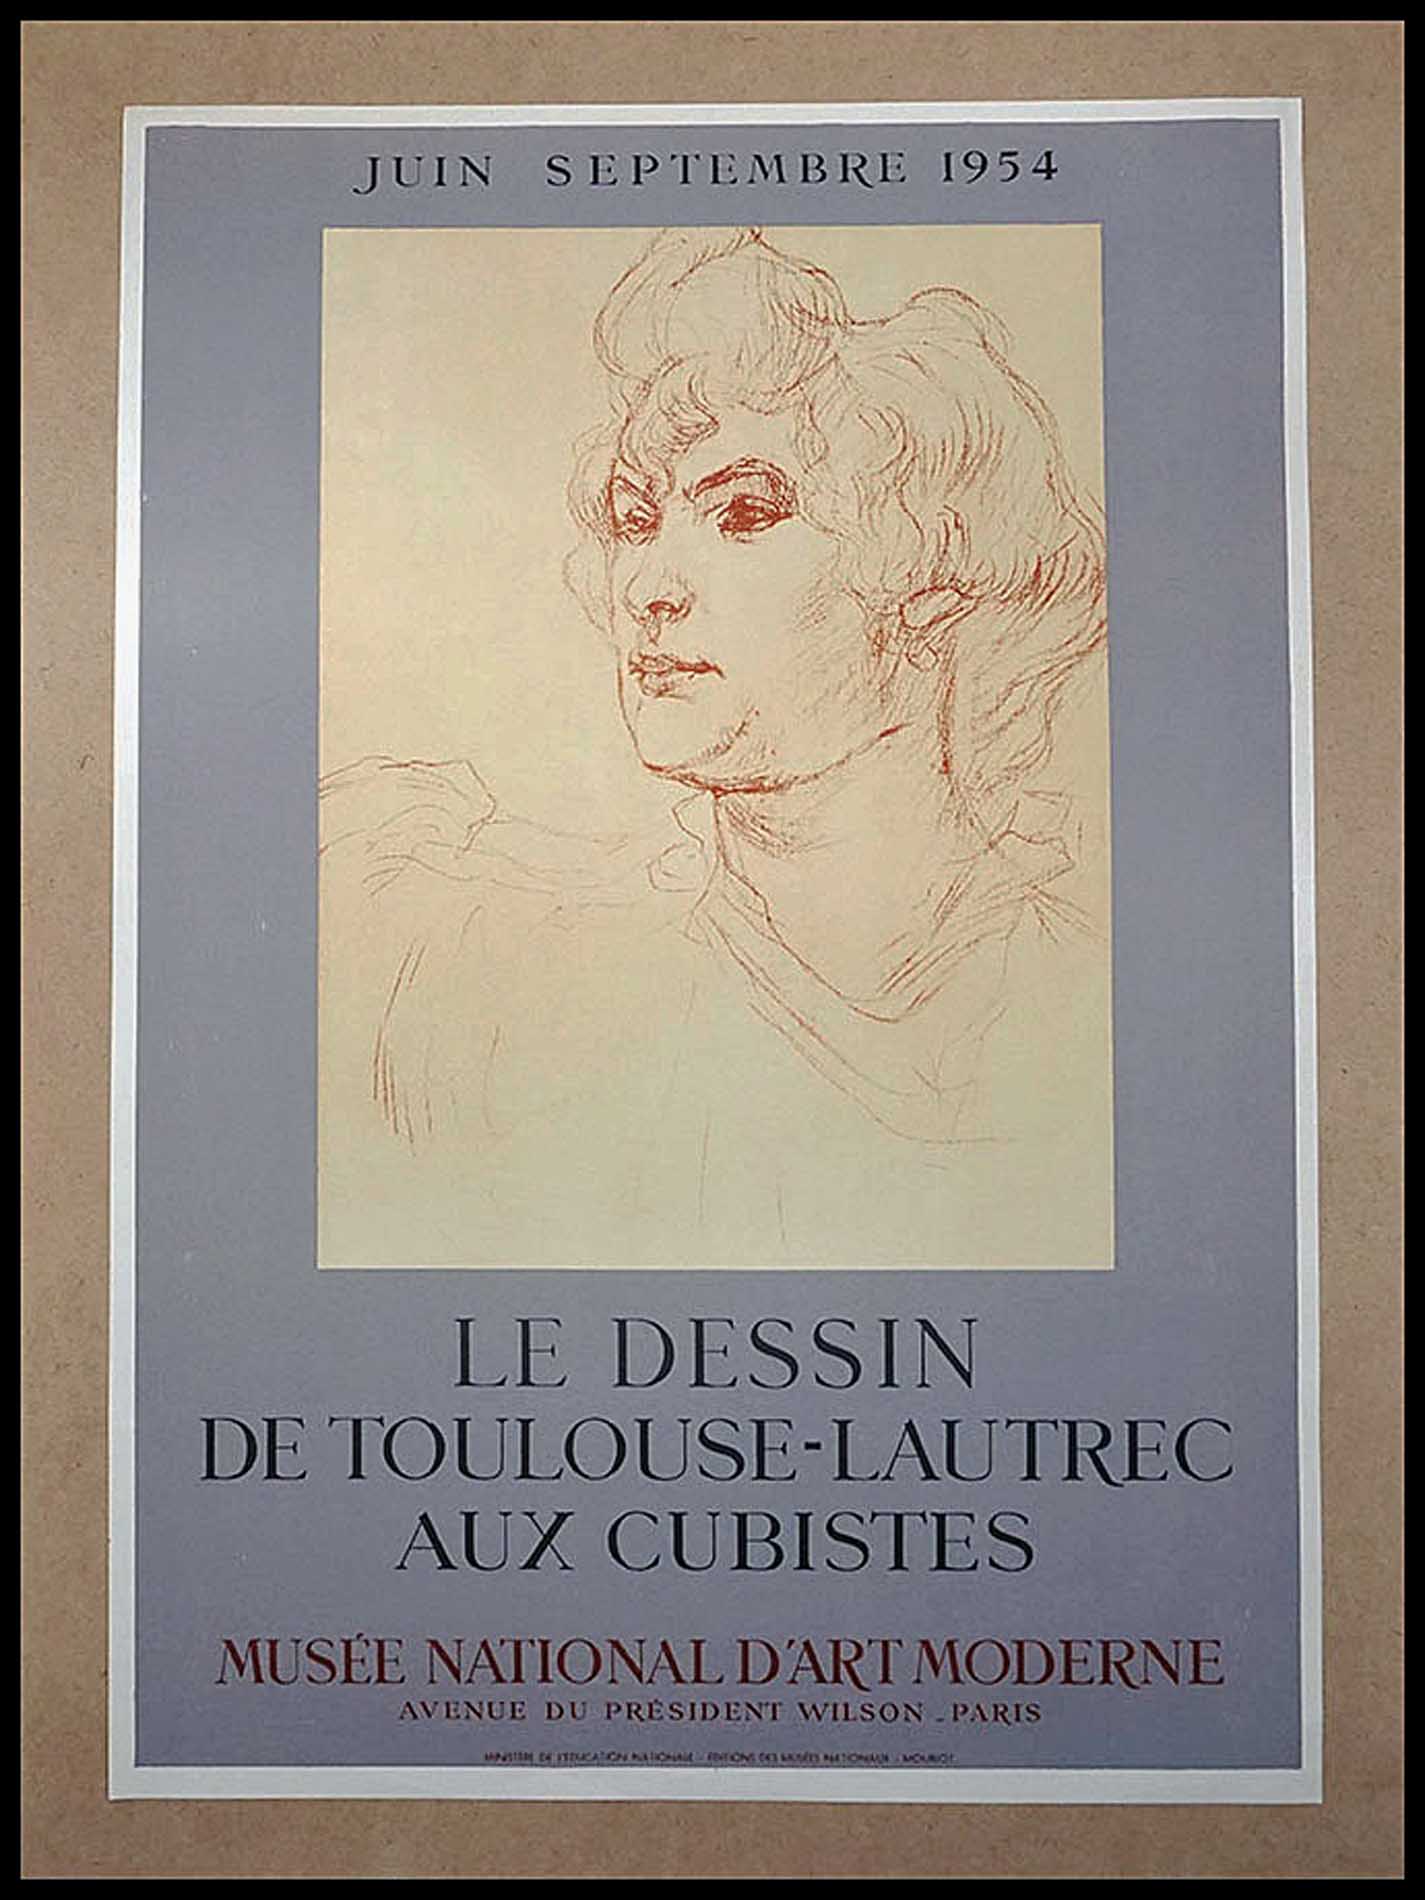 Toulouse Lautrec, Musee National d'Art modern, cubisme